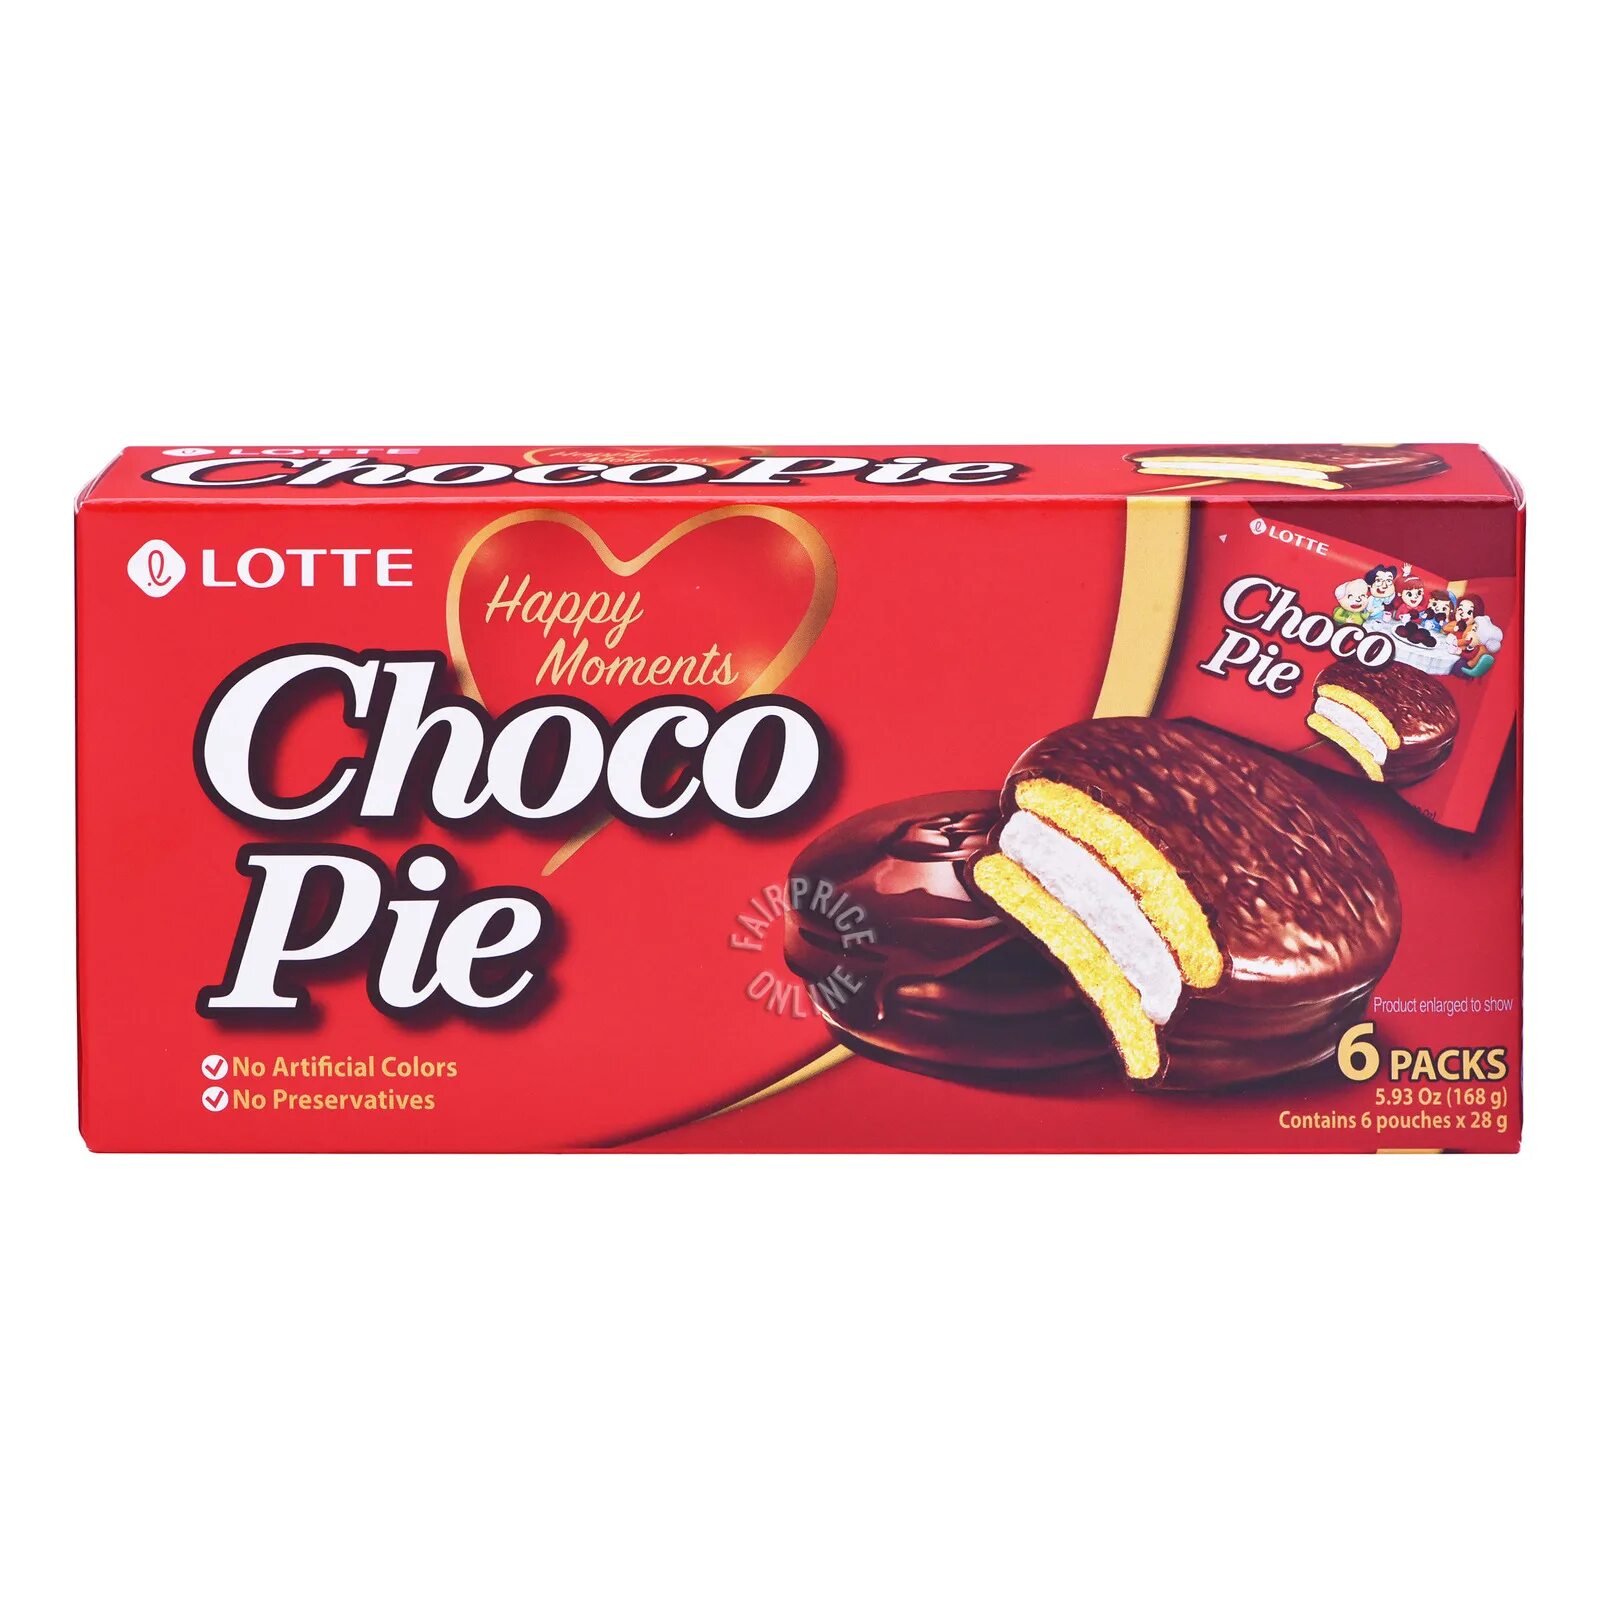 Лотте чоко. Lotte Choco pie. Lotte Choco pie 168. Orion Choco pie. Lotte South Korea Choco pie.